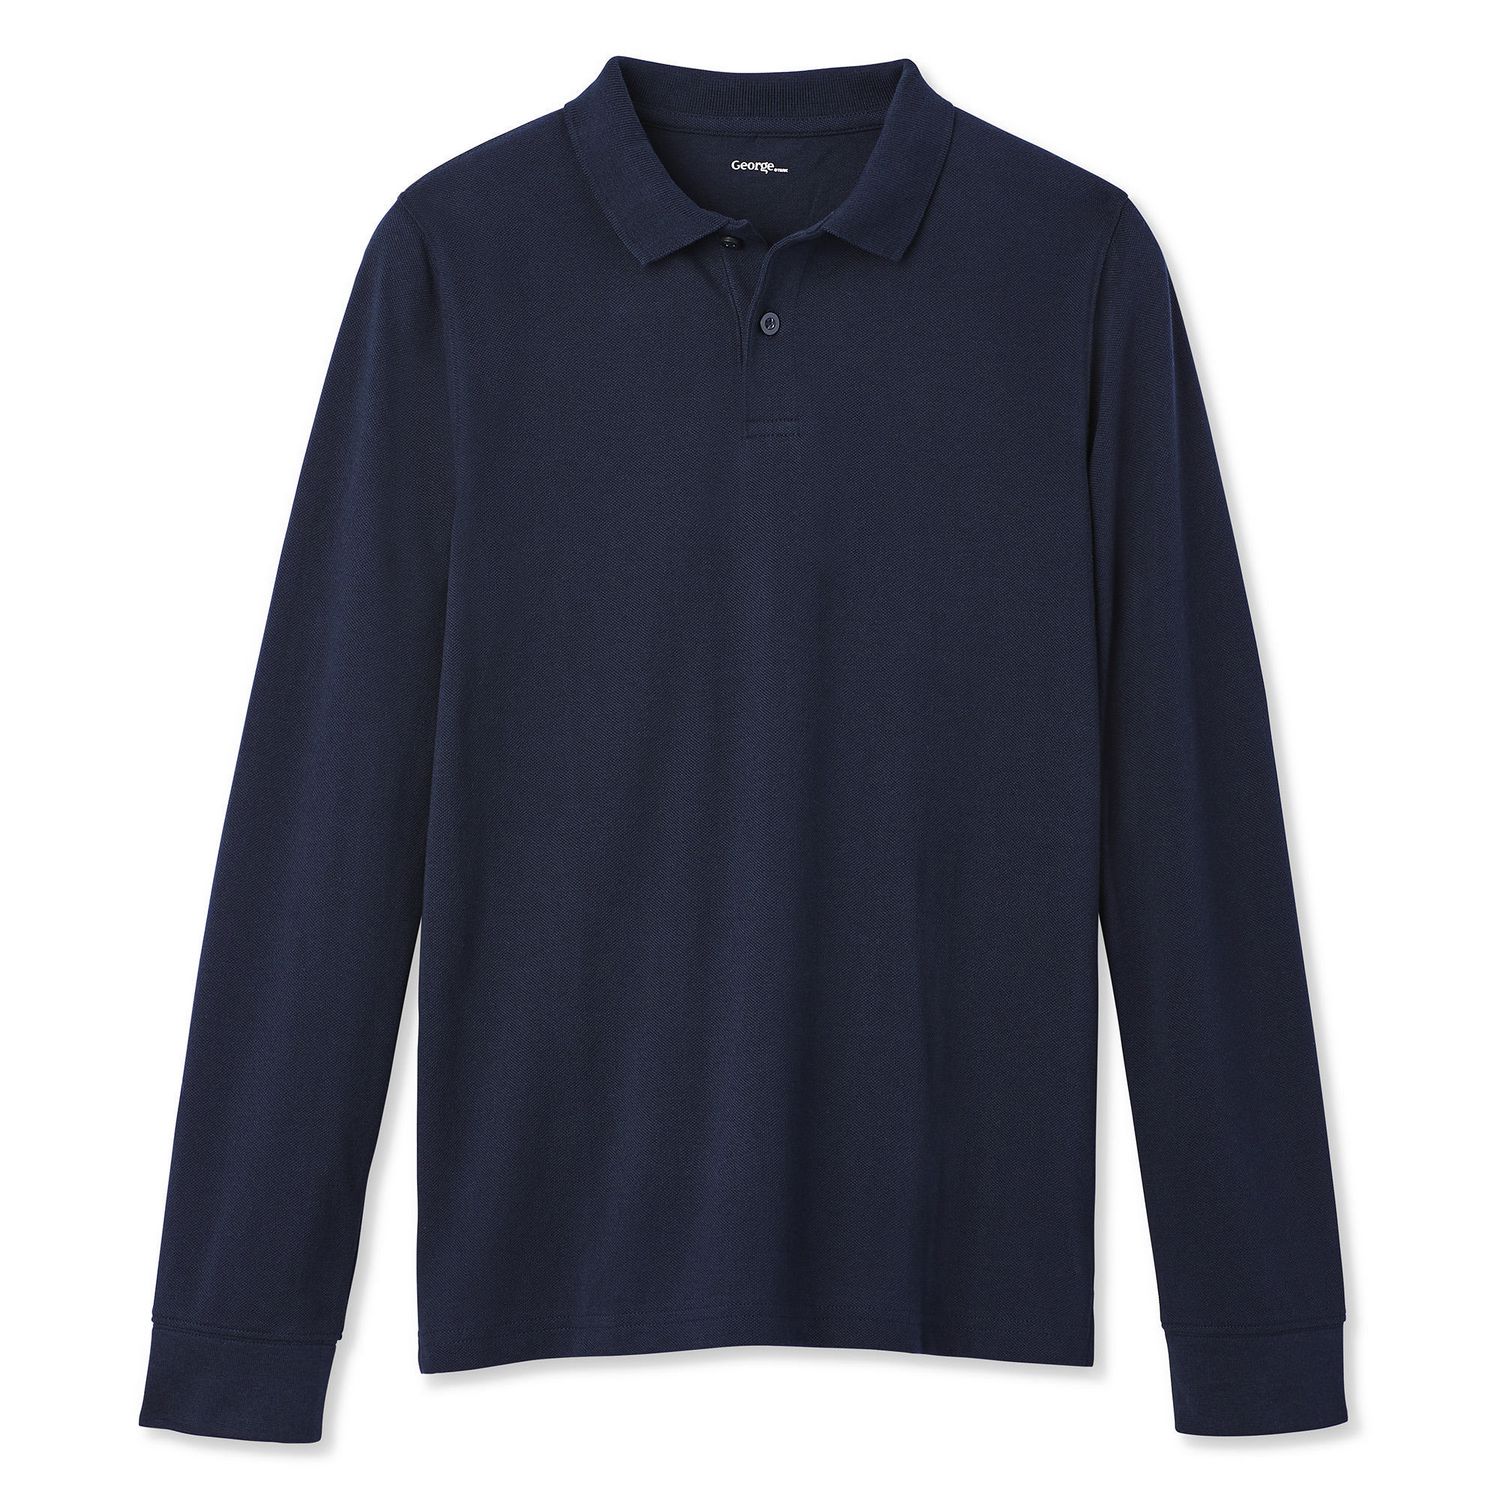 George Boys' Uniform Long Sleeve Pique Polo | Walmart Canada